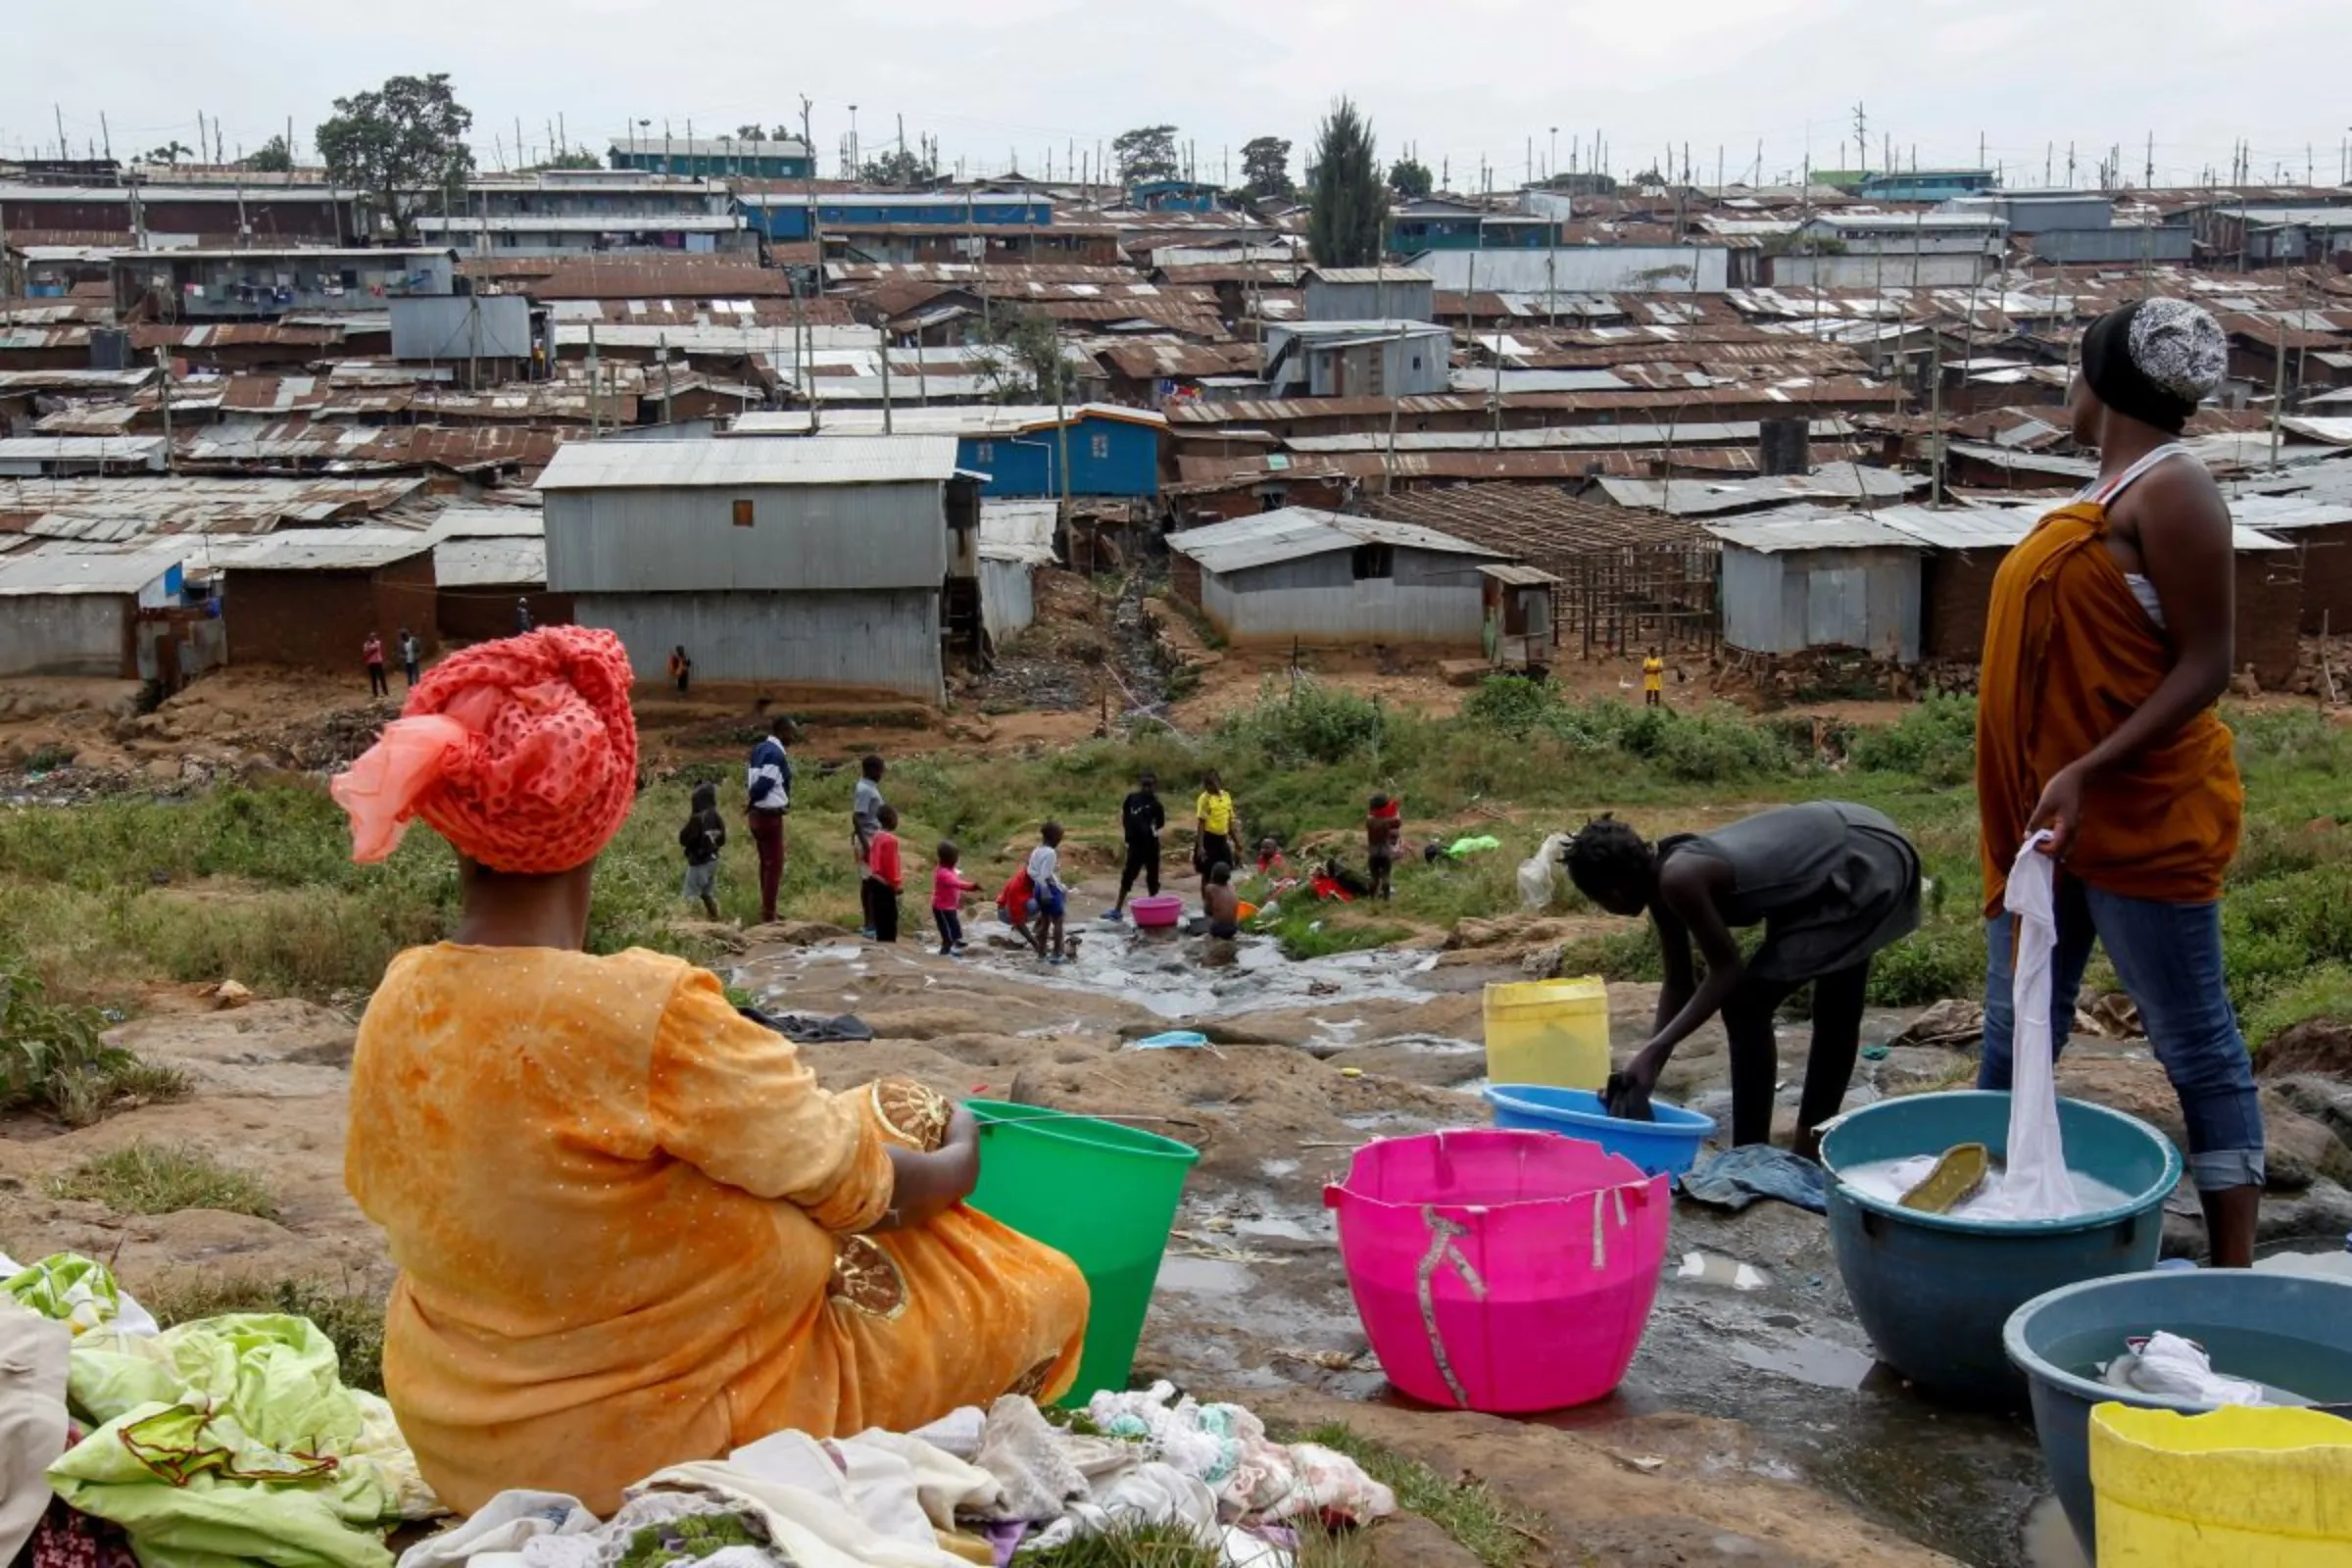 Women wash laundry at a water puddle within the Kibera slums in Nairobi, Kenya, July 21, 2020